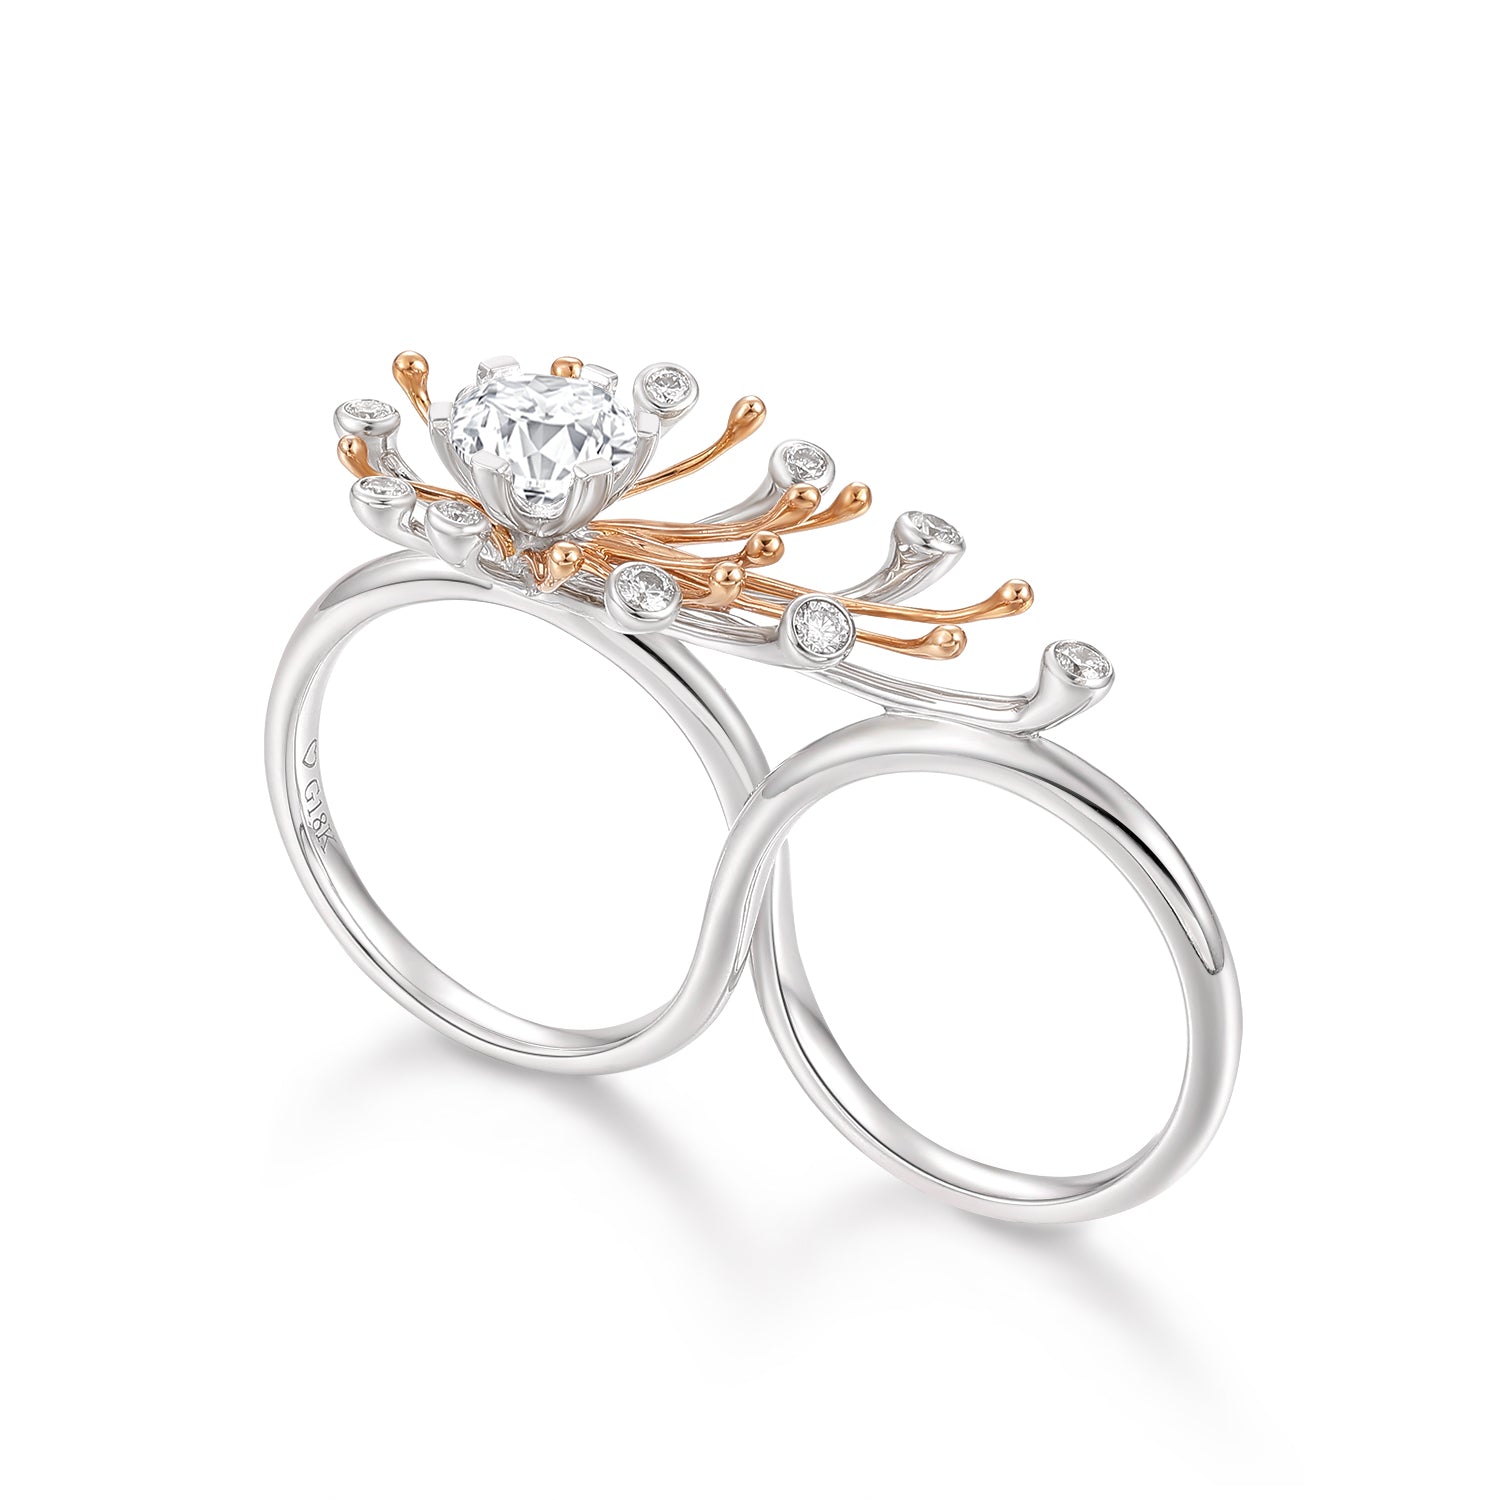 The best Lab-Grown Diamond Wedding Ring 1.9 CT TW, 18K White Gold.